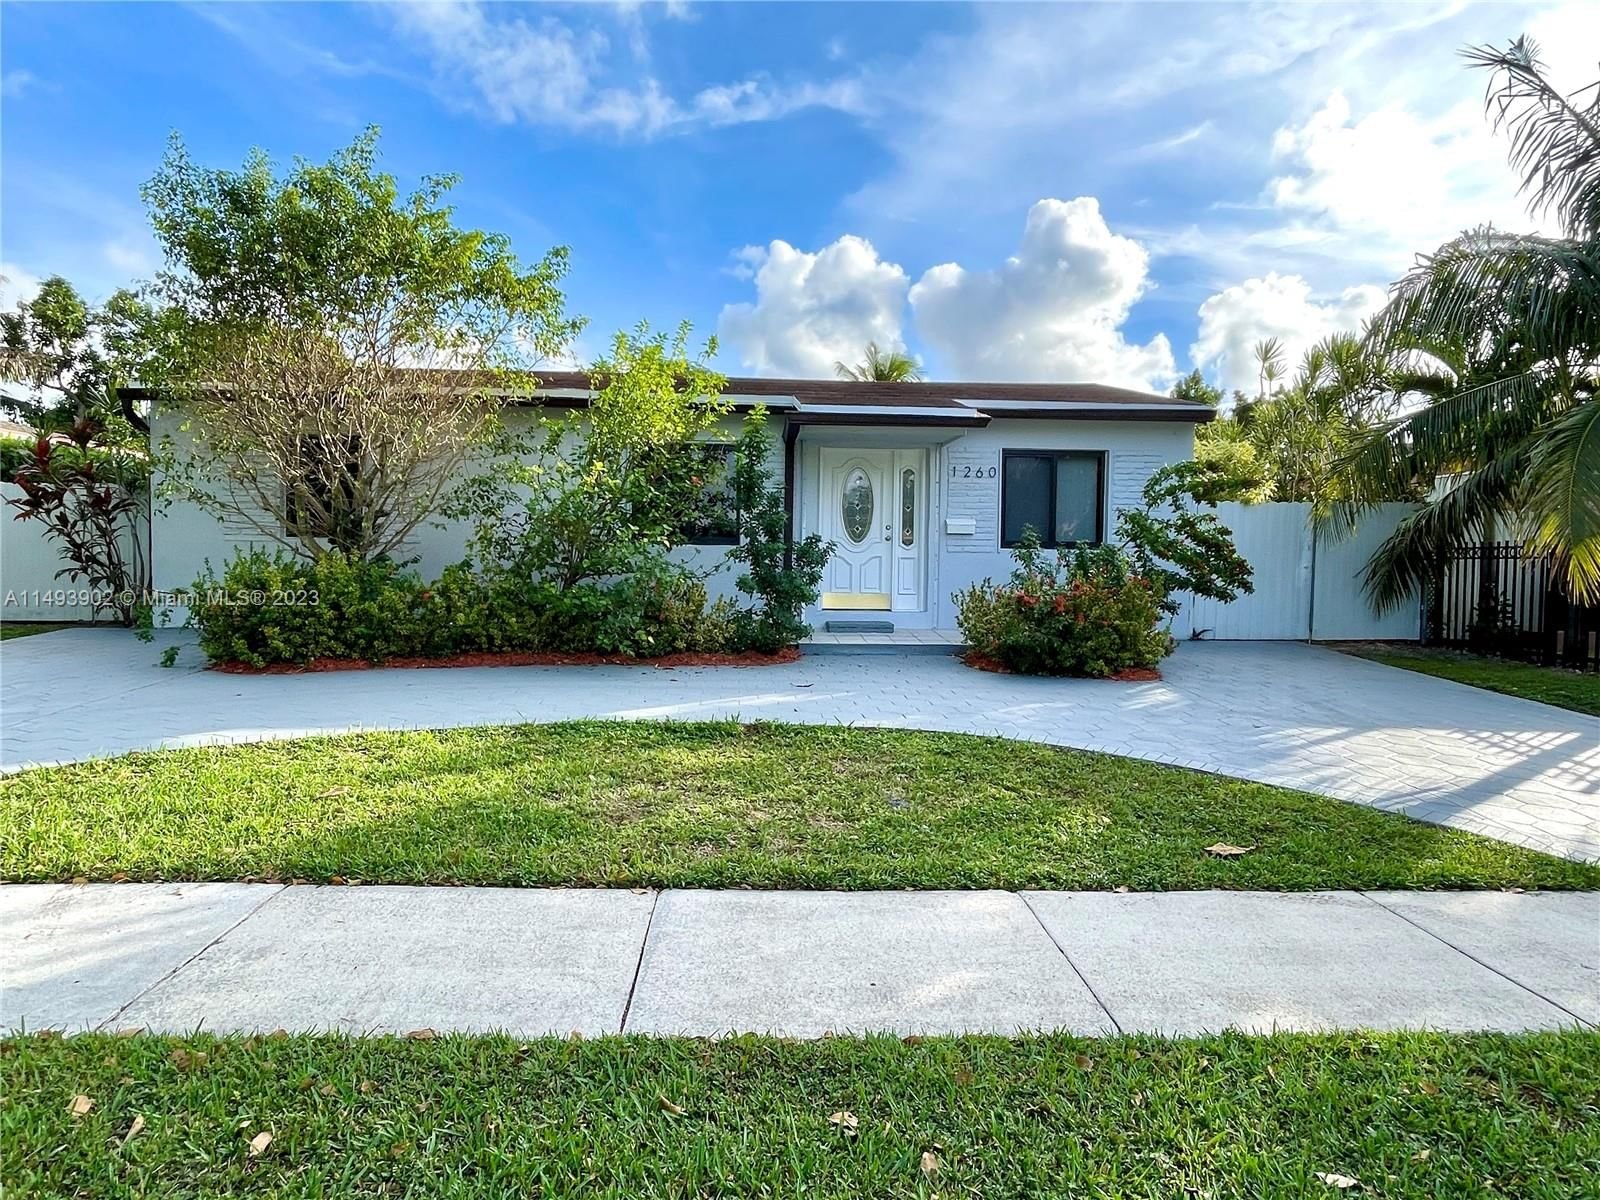 Real estate property located at 1260 143rd St, Miami-Dade County, North Miami, FL